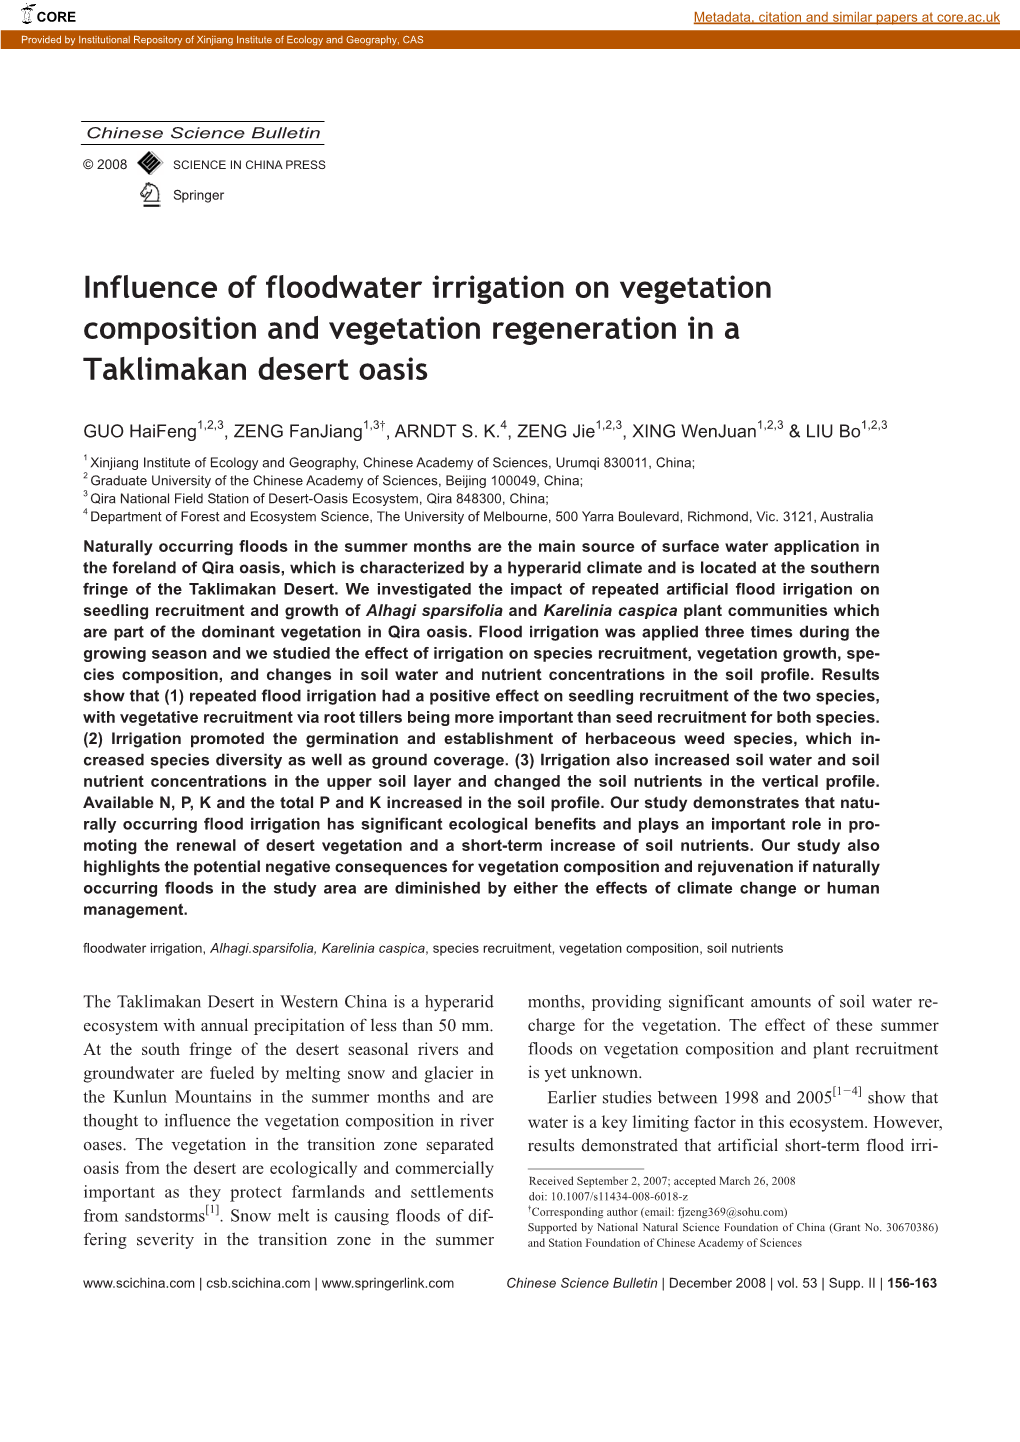 Influence of Floodwater Irrigation on Vegetation Composition and Vegetation Regeneration in a Taklimakan Desert Oasis